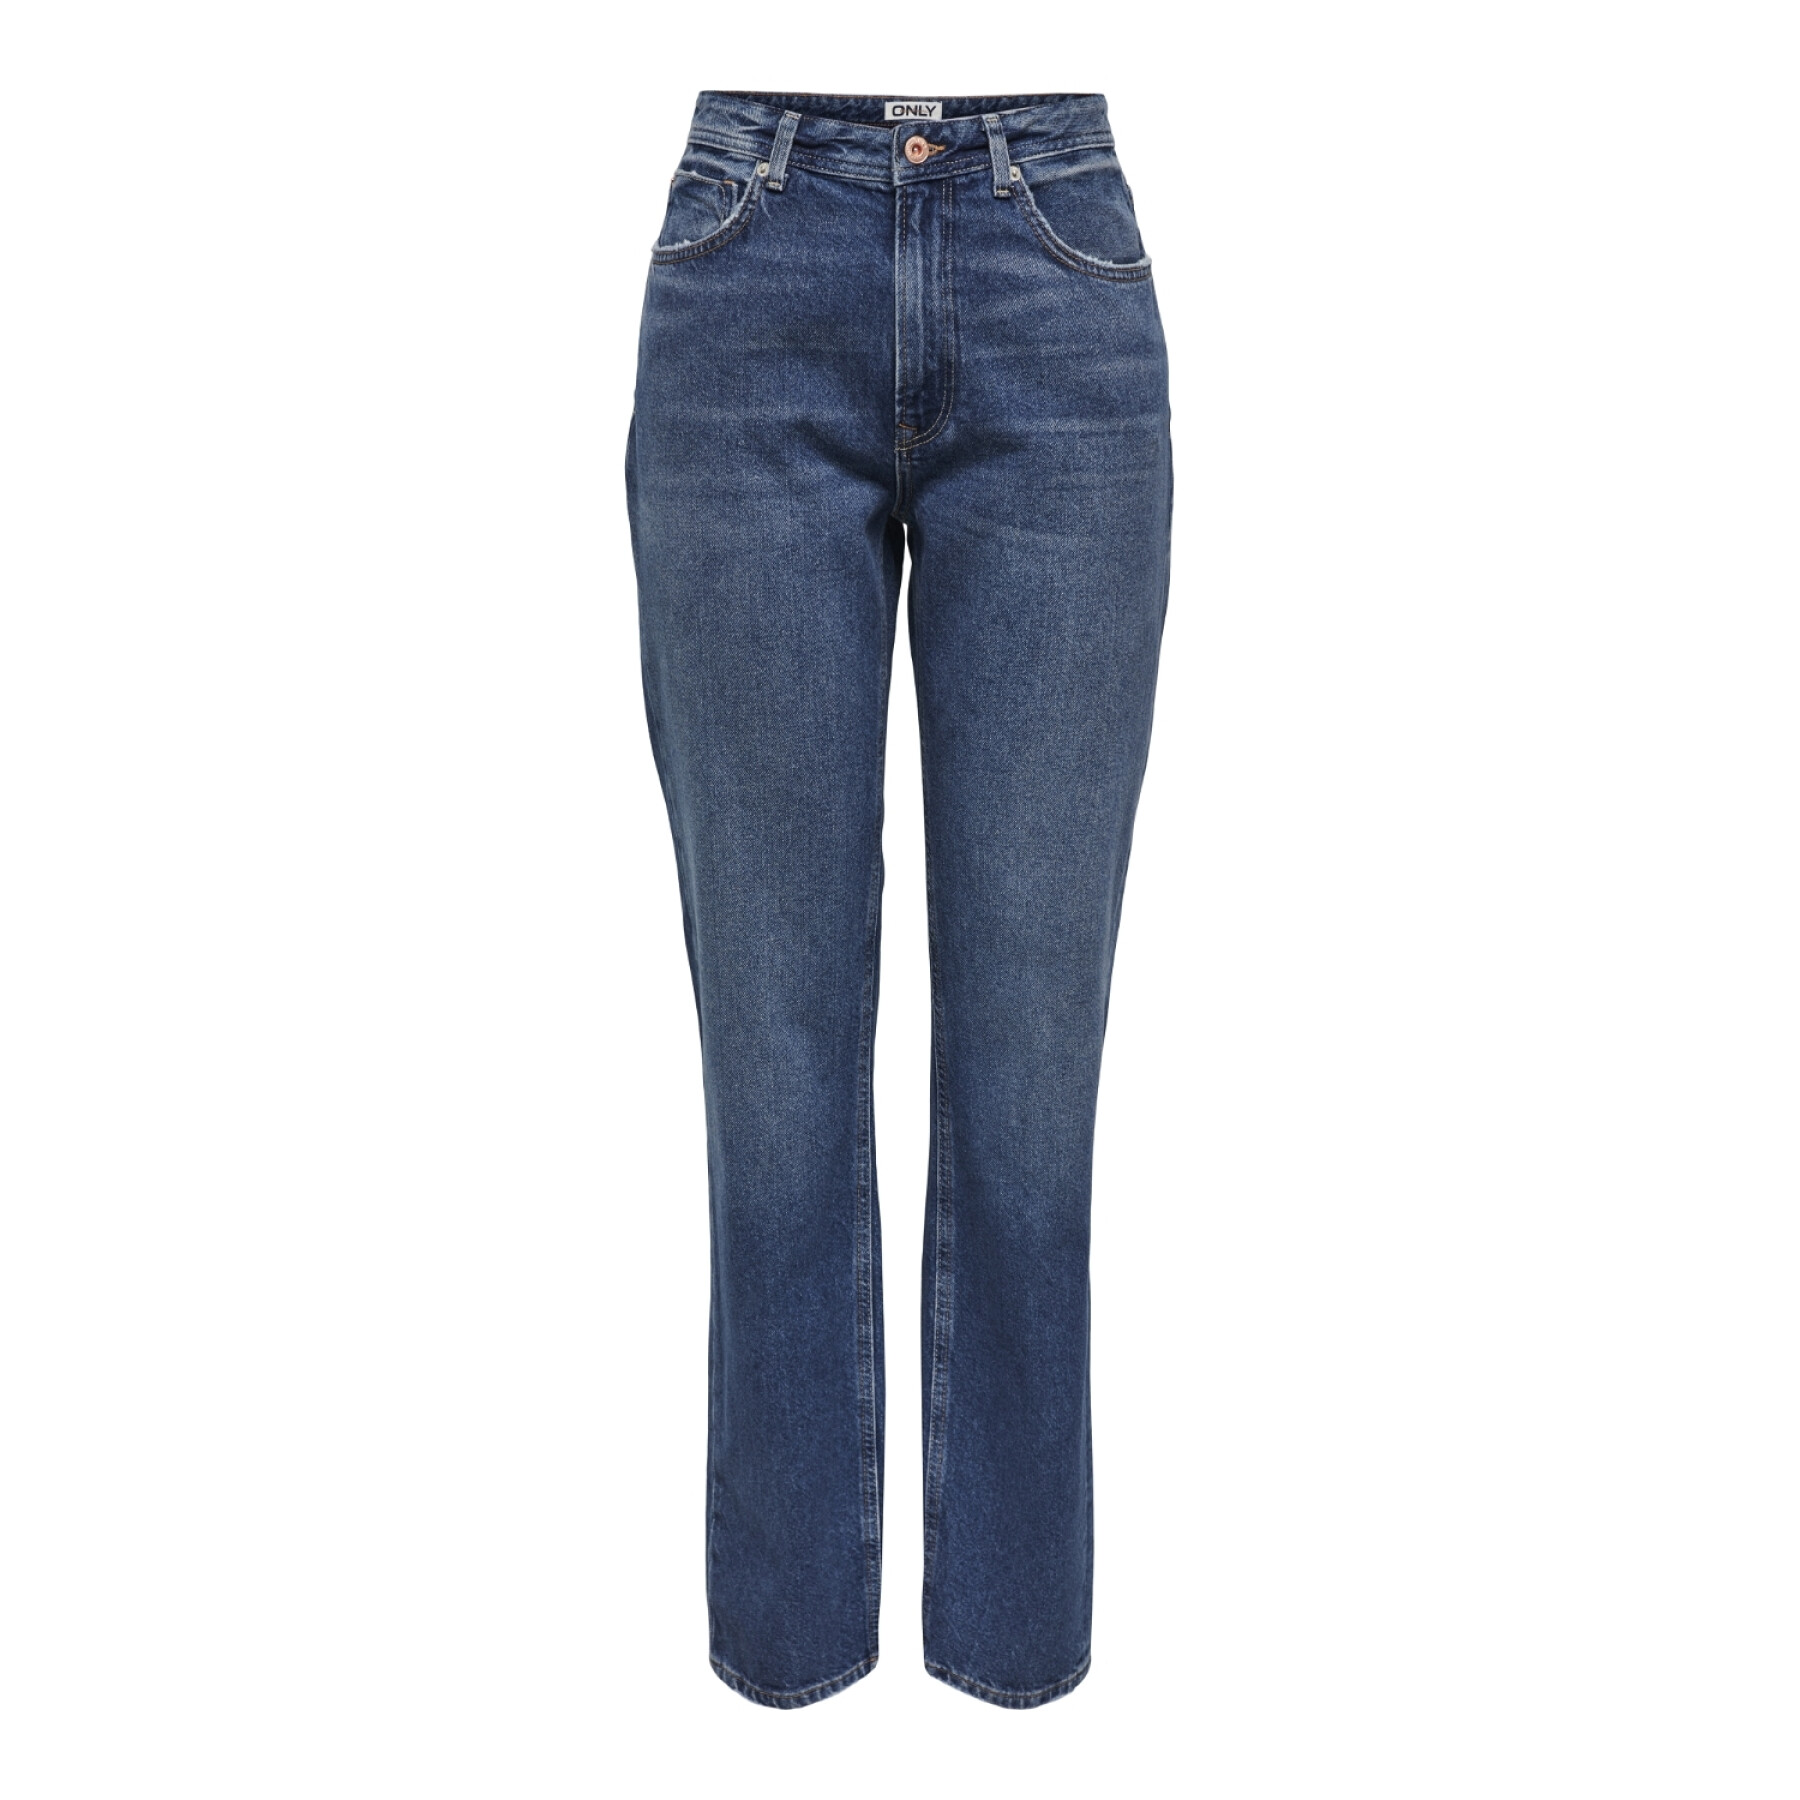 Women's jeans Only Jaci MW CRO209